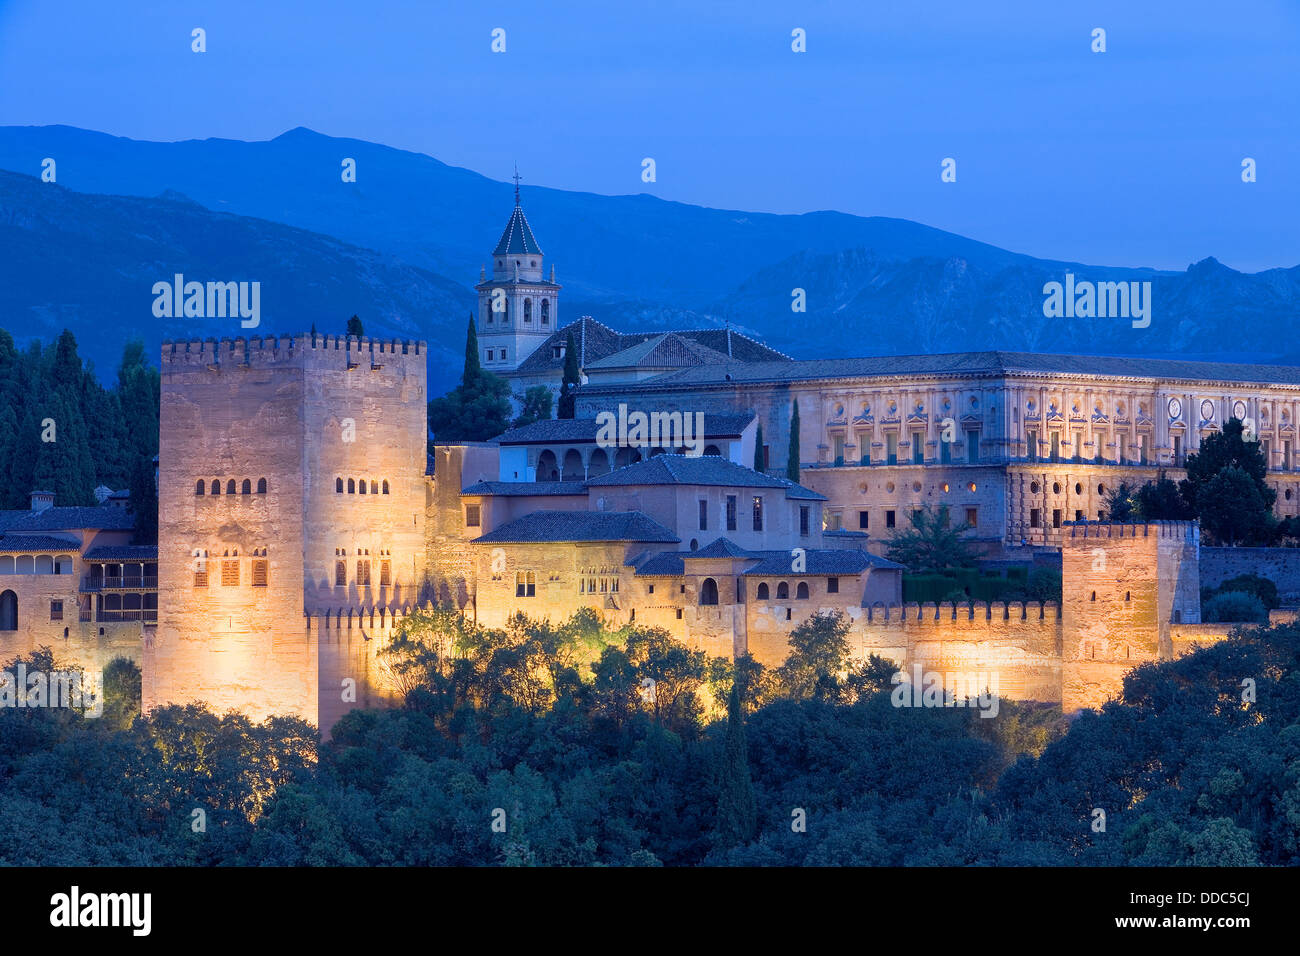 La; Alhambra; Granada, Übersicht, Scenic, Skyline, Nacht Stockfoto